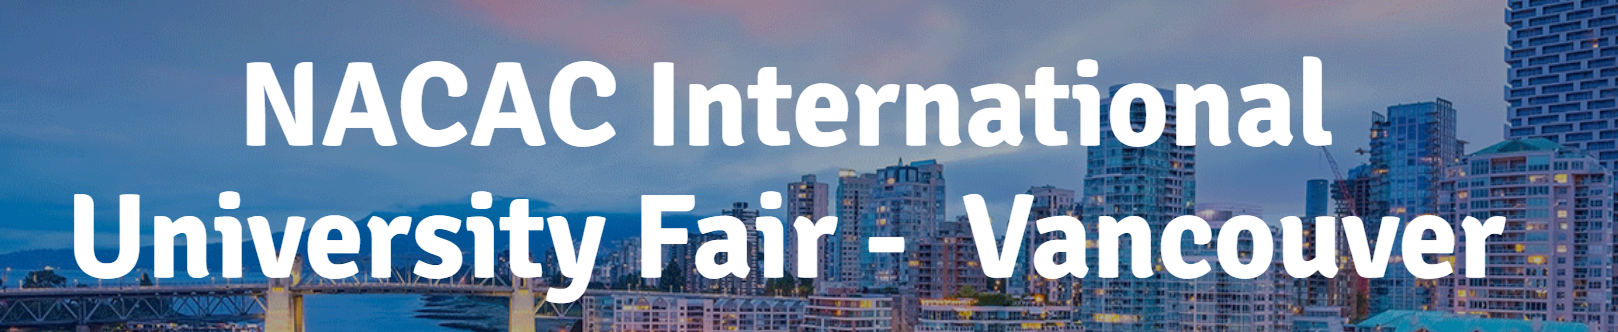 Vancouver International University Fair - April 27th 